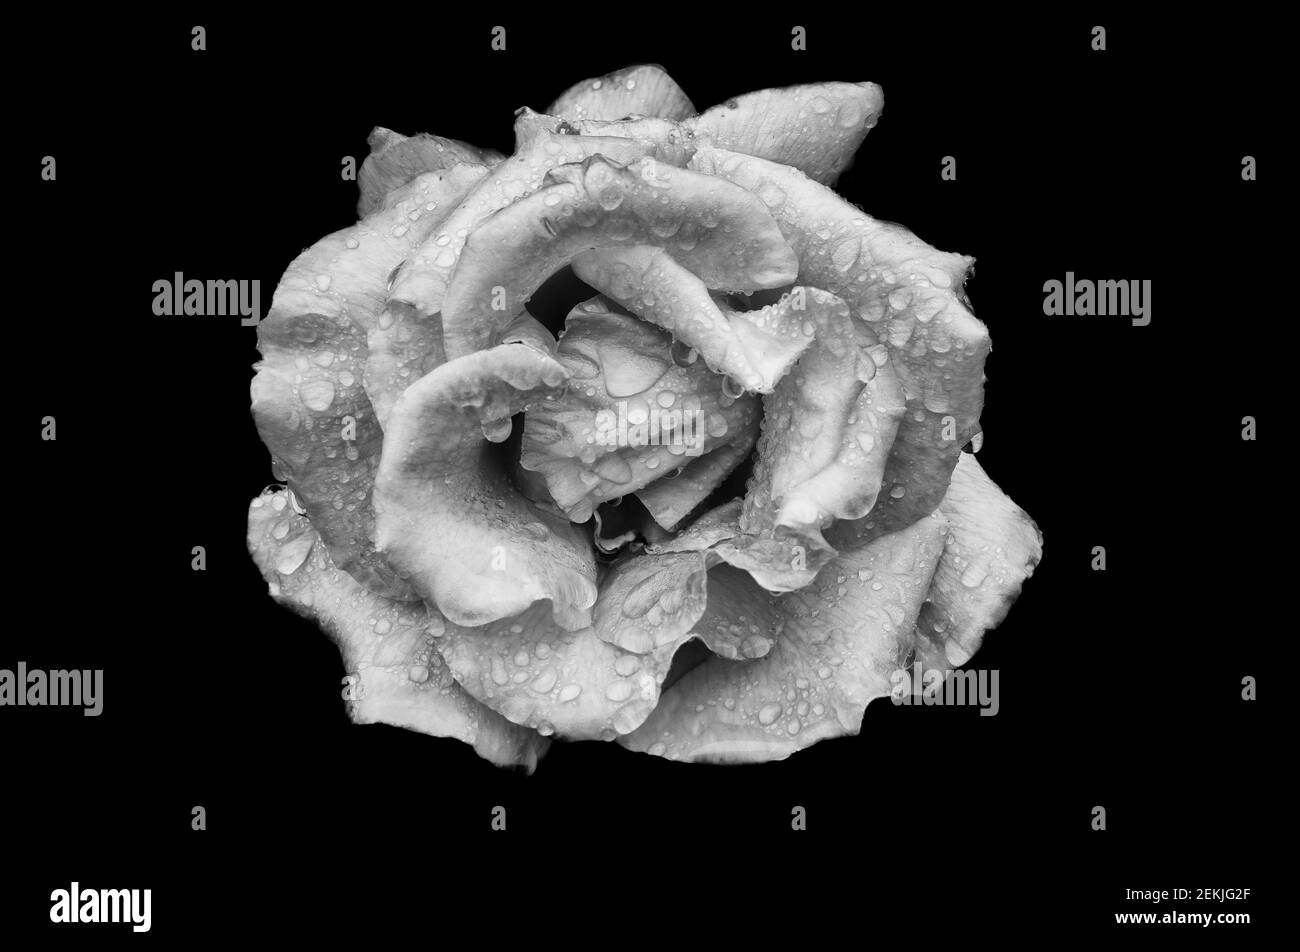 Testa di fiori di rosa ricoperta di rugiada in bianco e nero Foto Stock